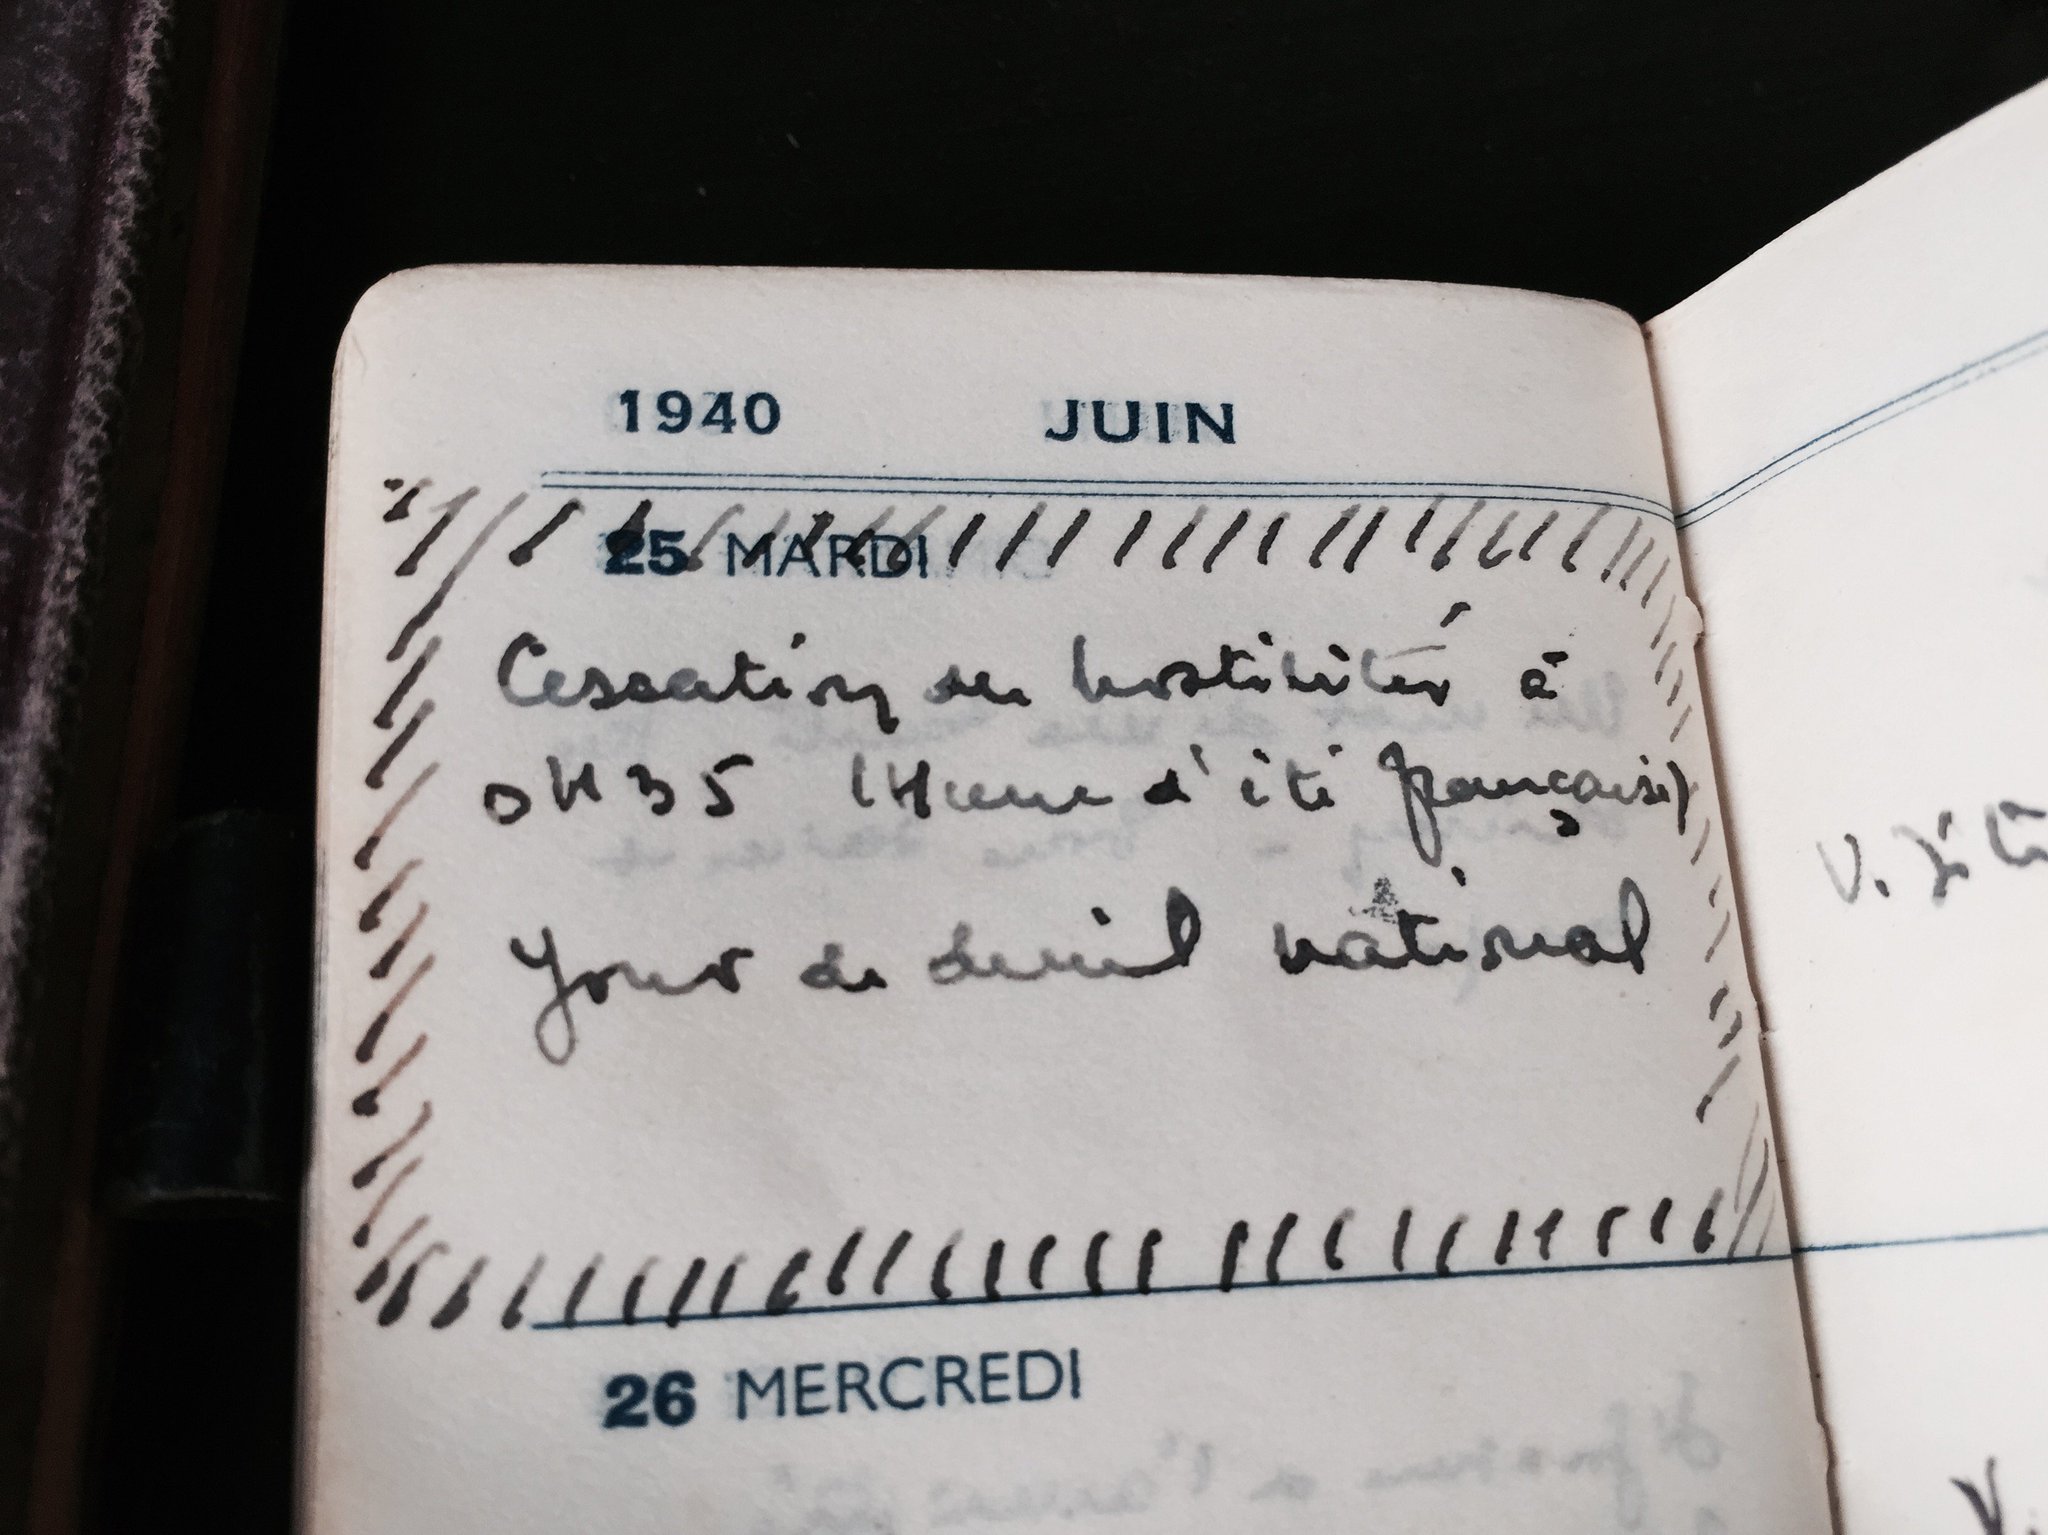 25 juin 1940, "Cessation des hostilités" #Madeleineproject https://t.co/kUmEtQAjOw